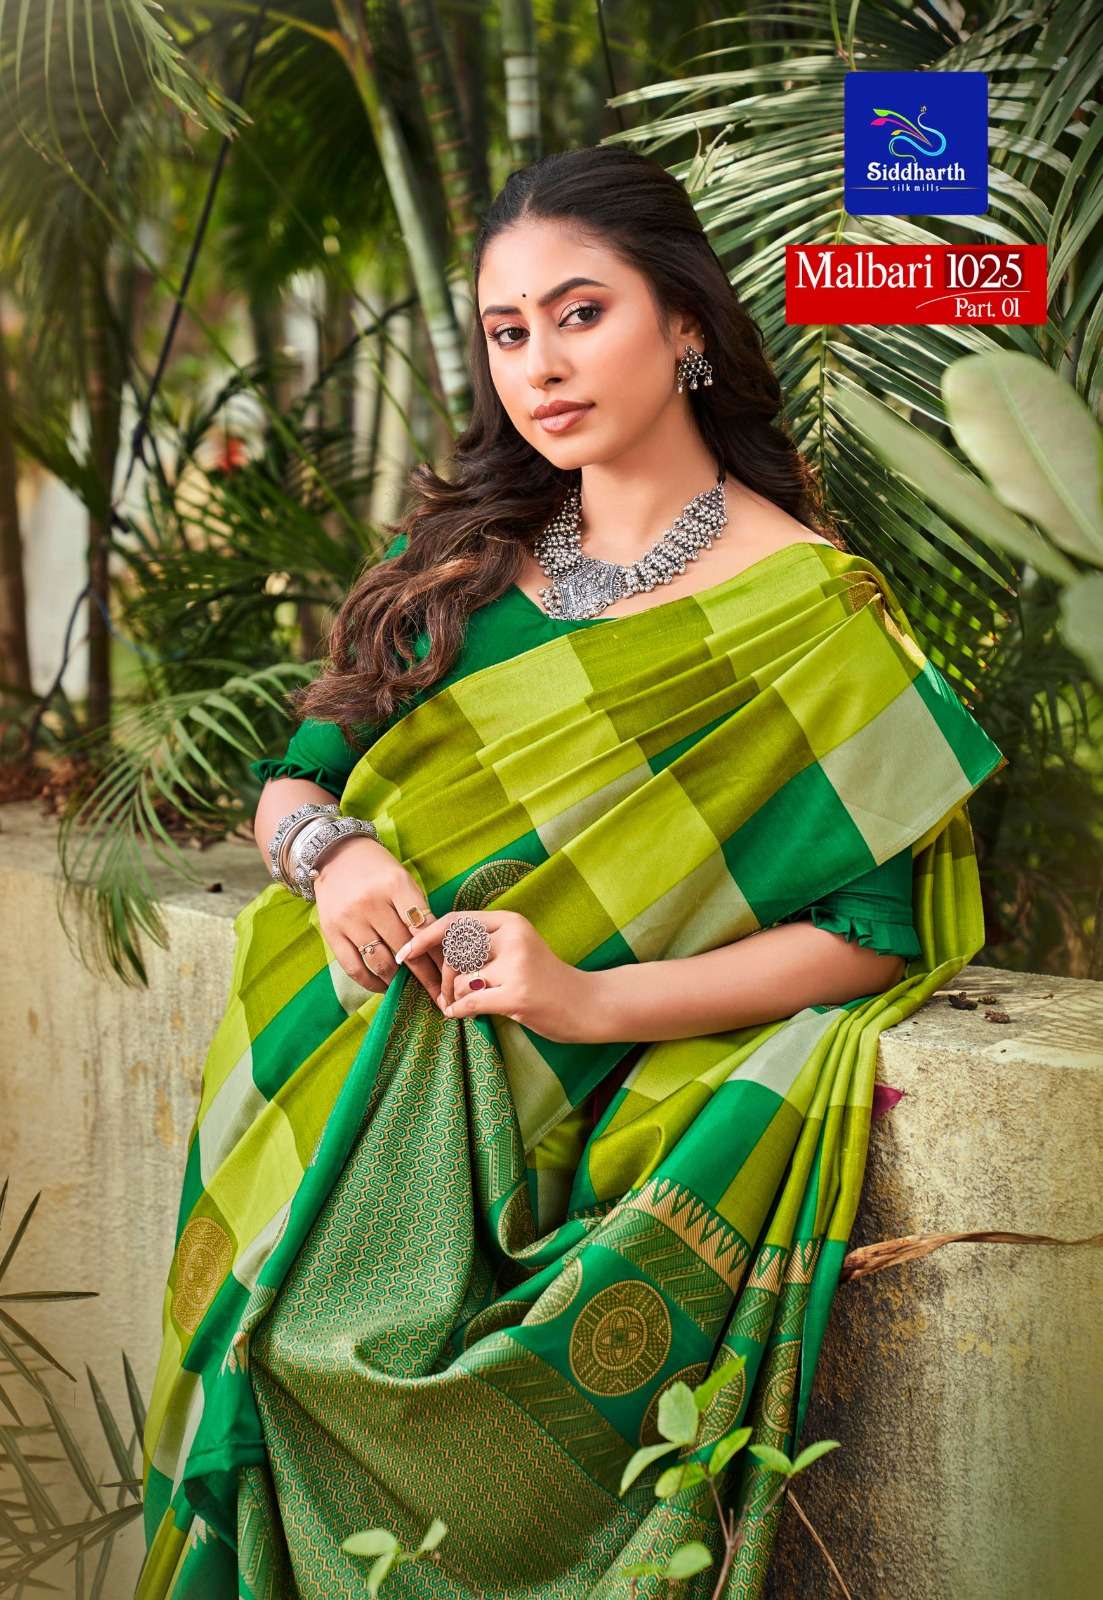 siddharth silk mills present malbari 1025 fabulous south indian saree collection 